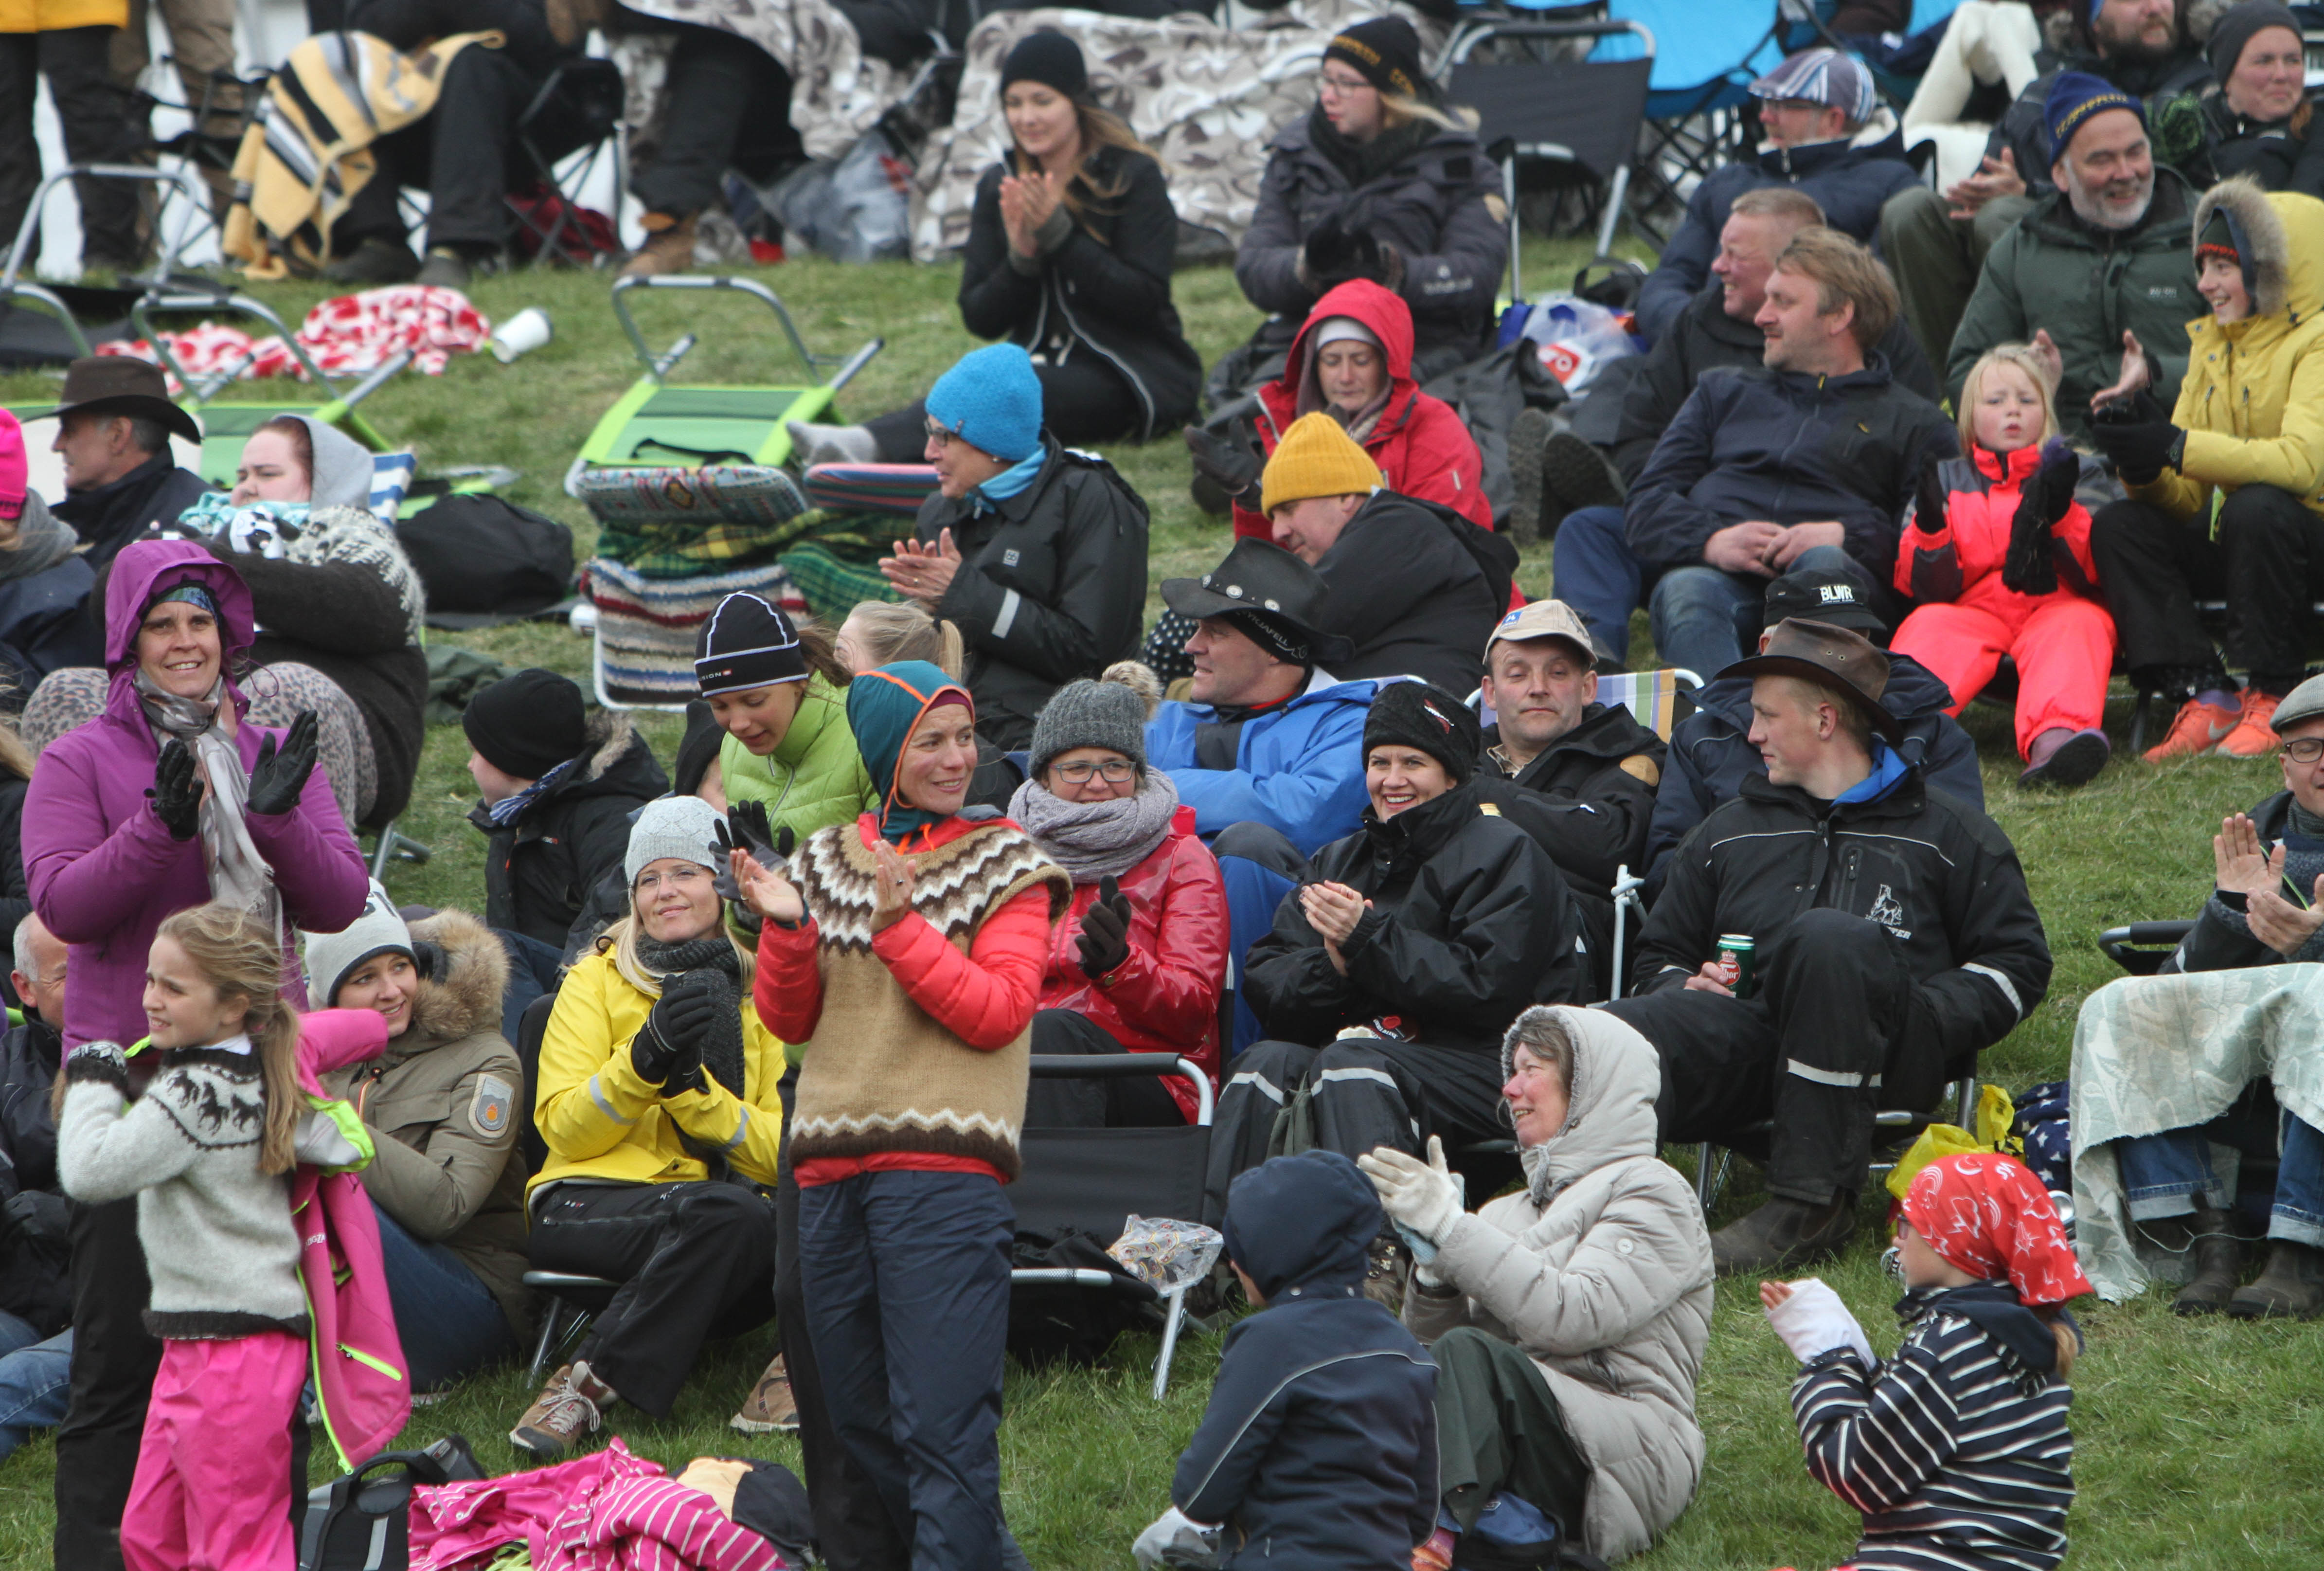 Kunnig och entusiastisk publik. Foto: Karin Cederman/Ishestnews.se